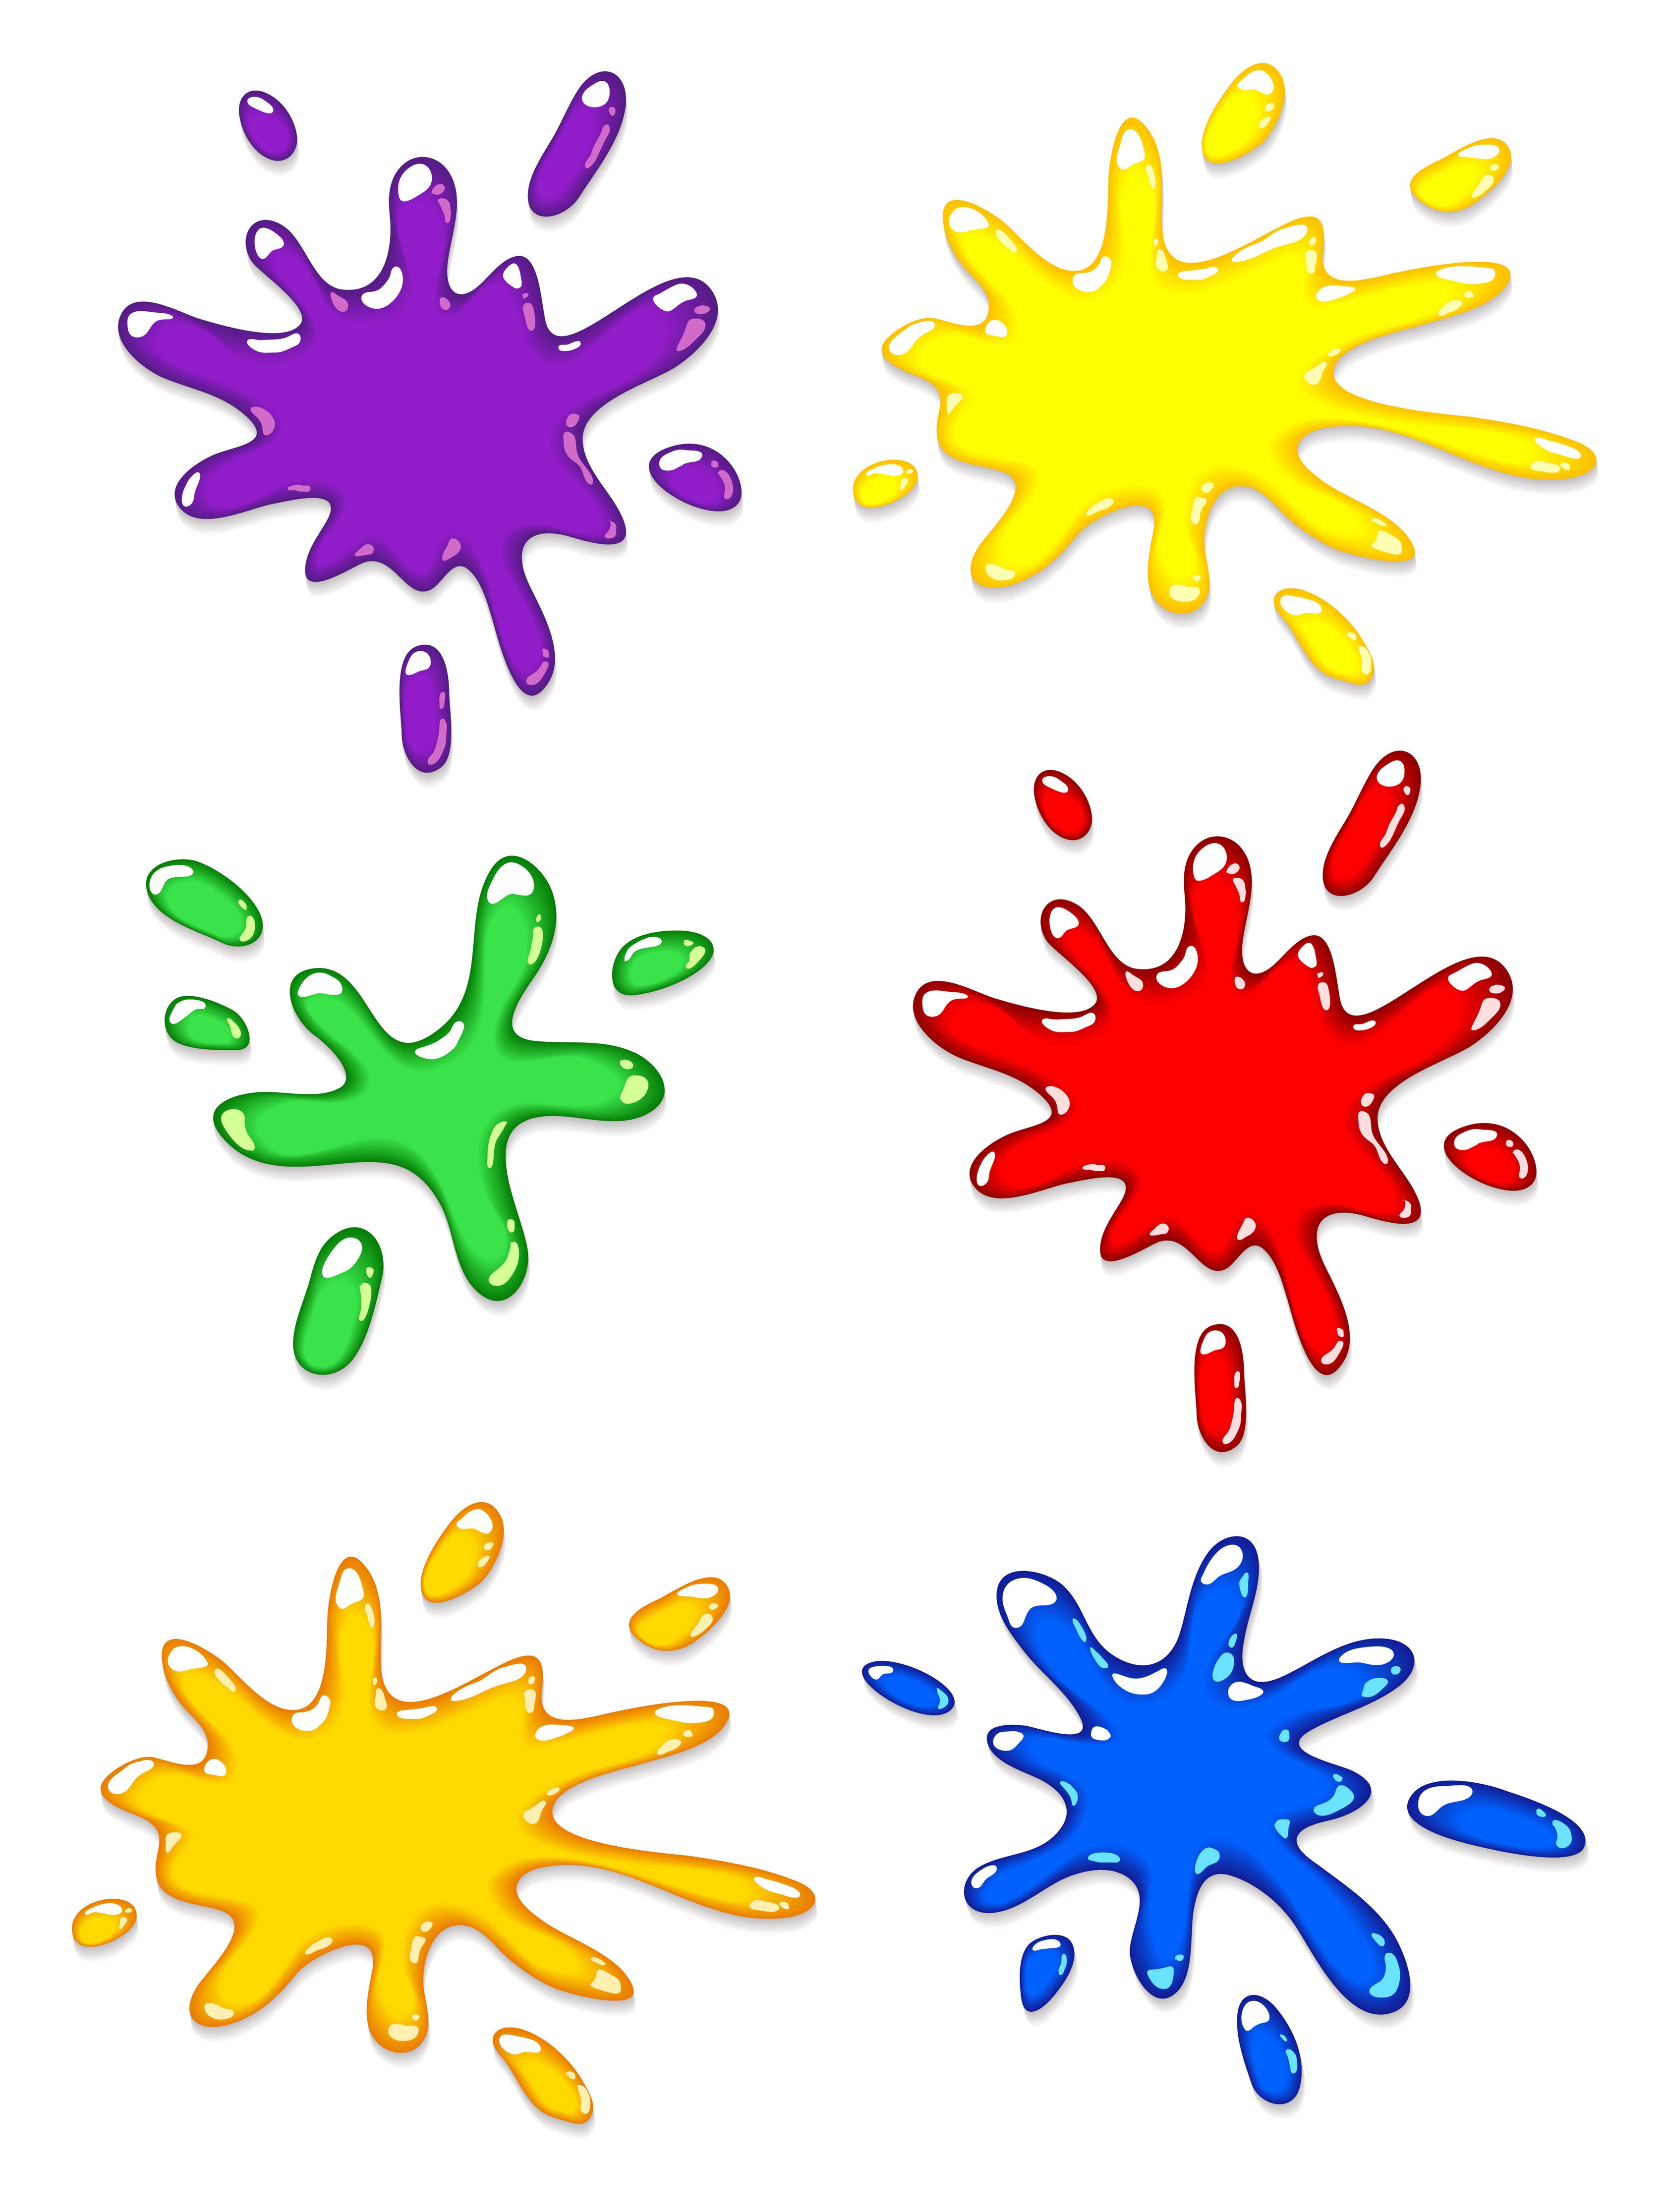 Paintball clipart rainbow. Cartoon splatters google search